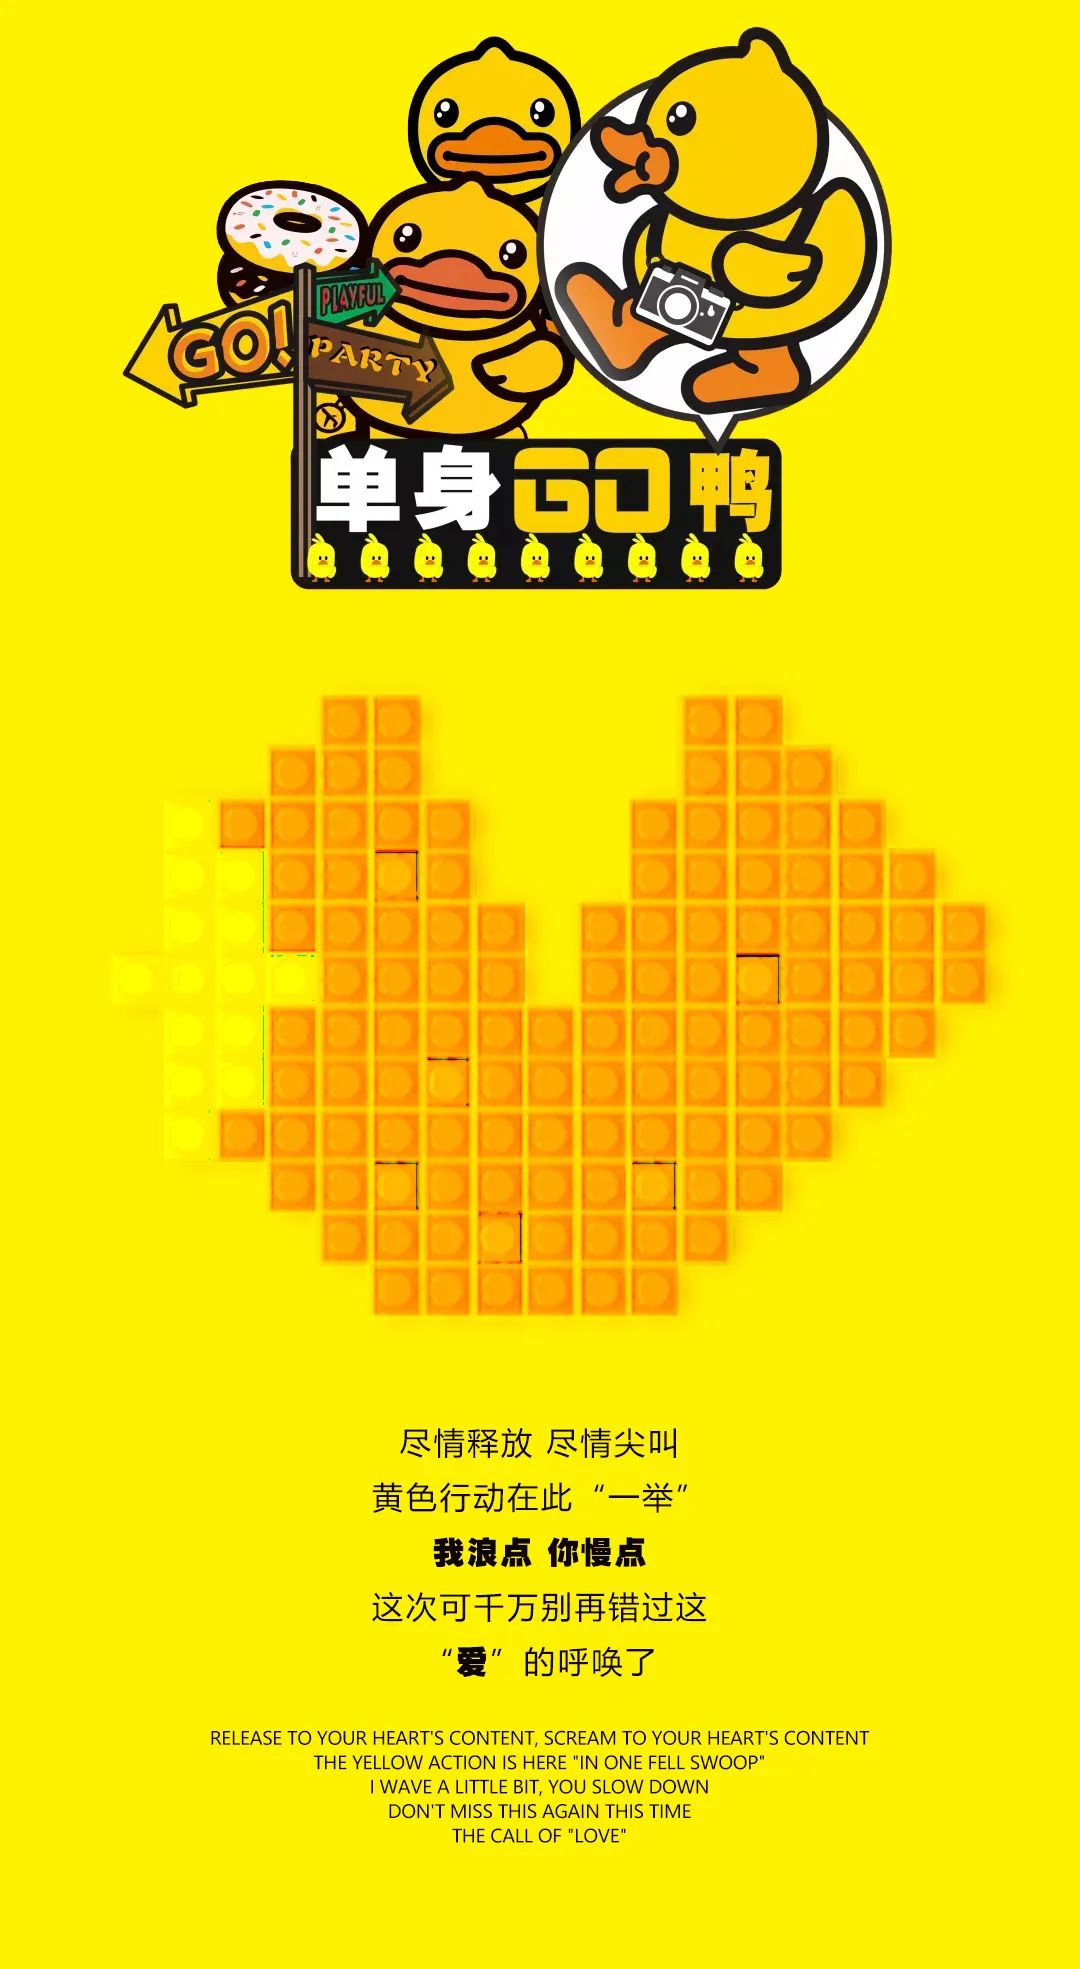 2021.11.10-11《SINGLES DAY》 史上最单纯的互动模式 很“黄”、很“大”还很'长'-晋江F1酒吧/F1 CLUB